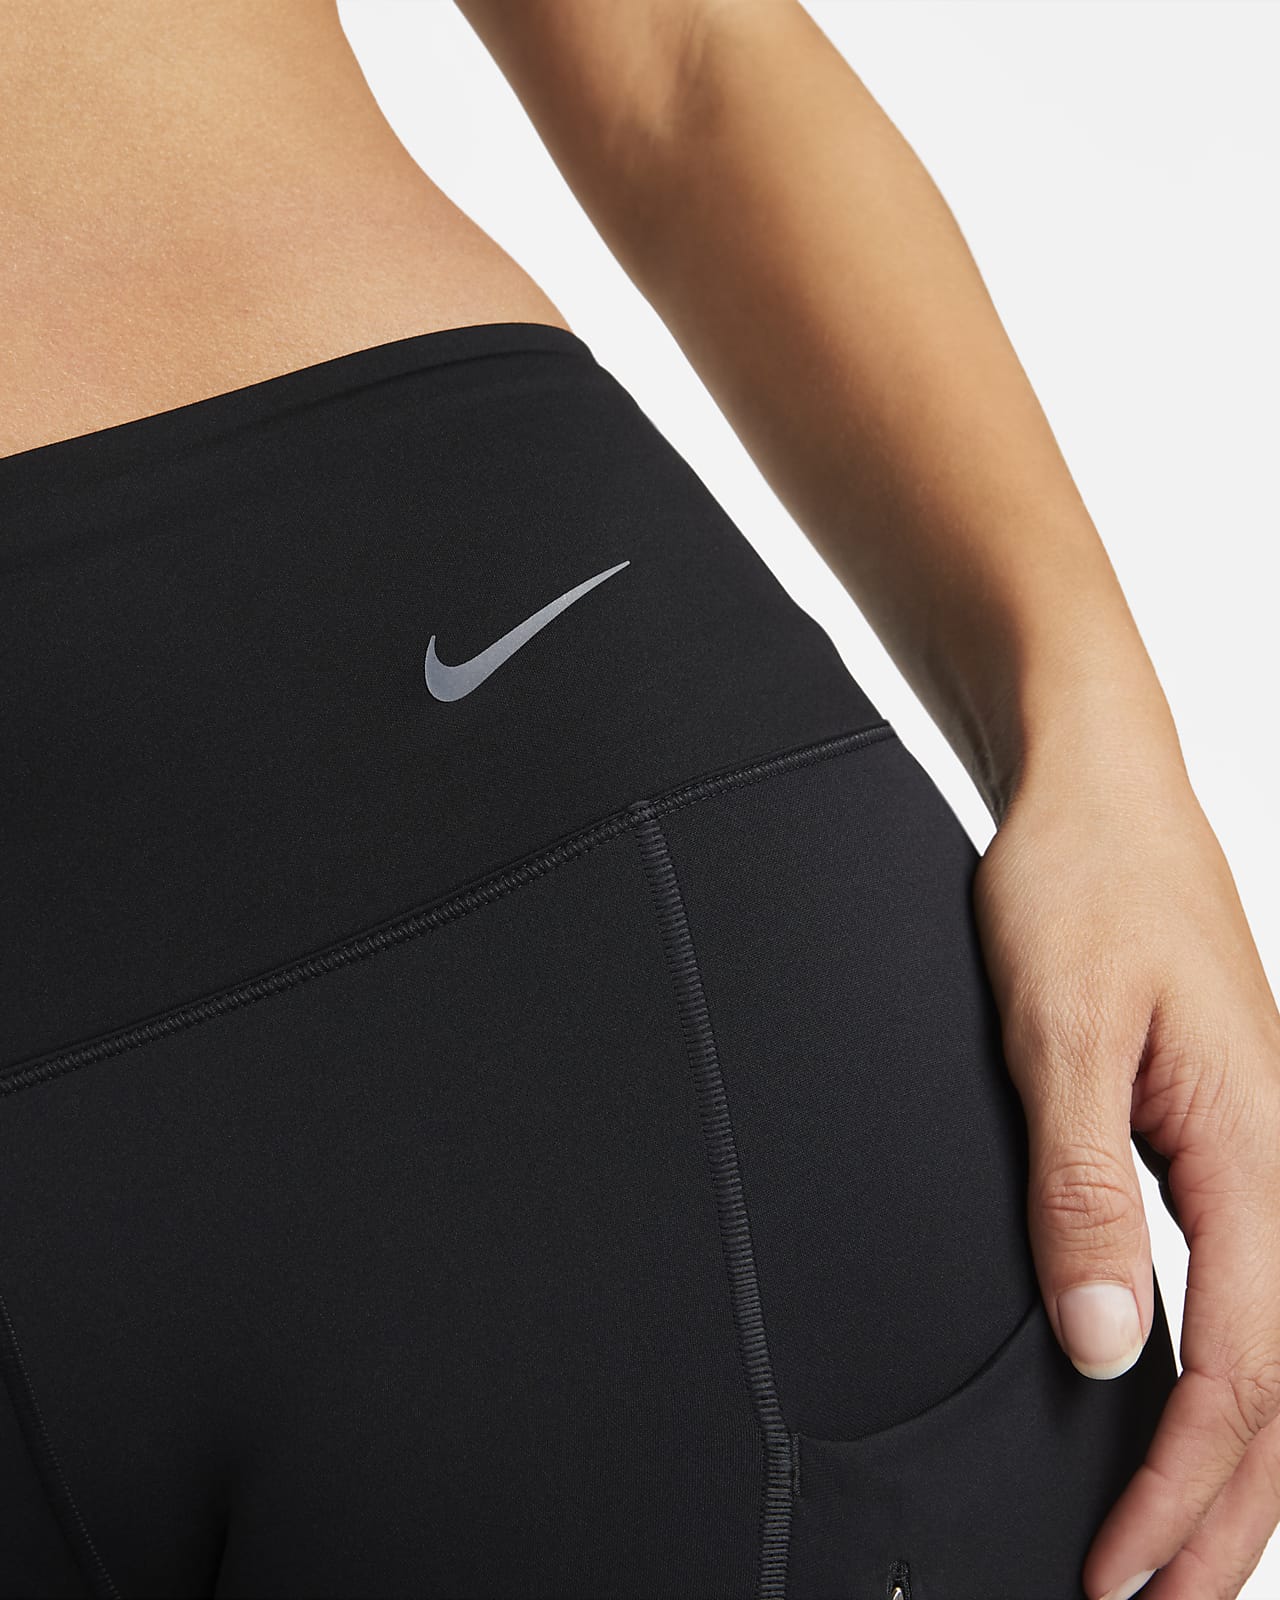 Nike Training Pro 365 cropped leggings in black